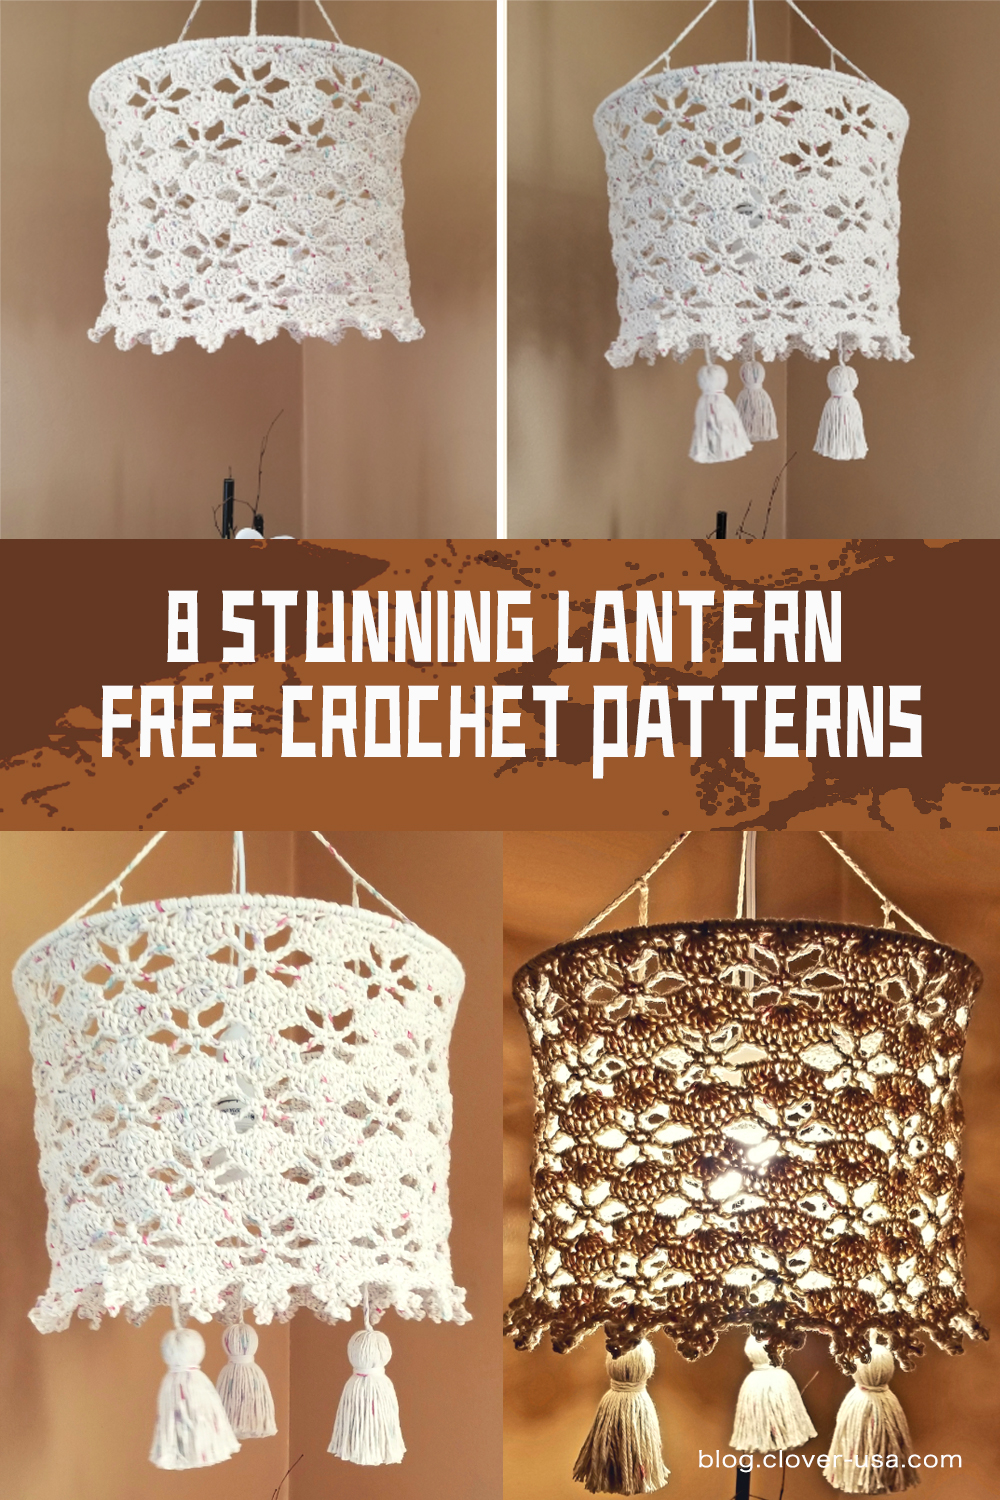 8 Stunning Lantern FREE Crochet Patterns